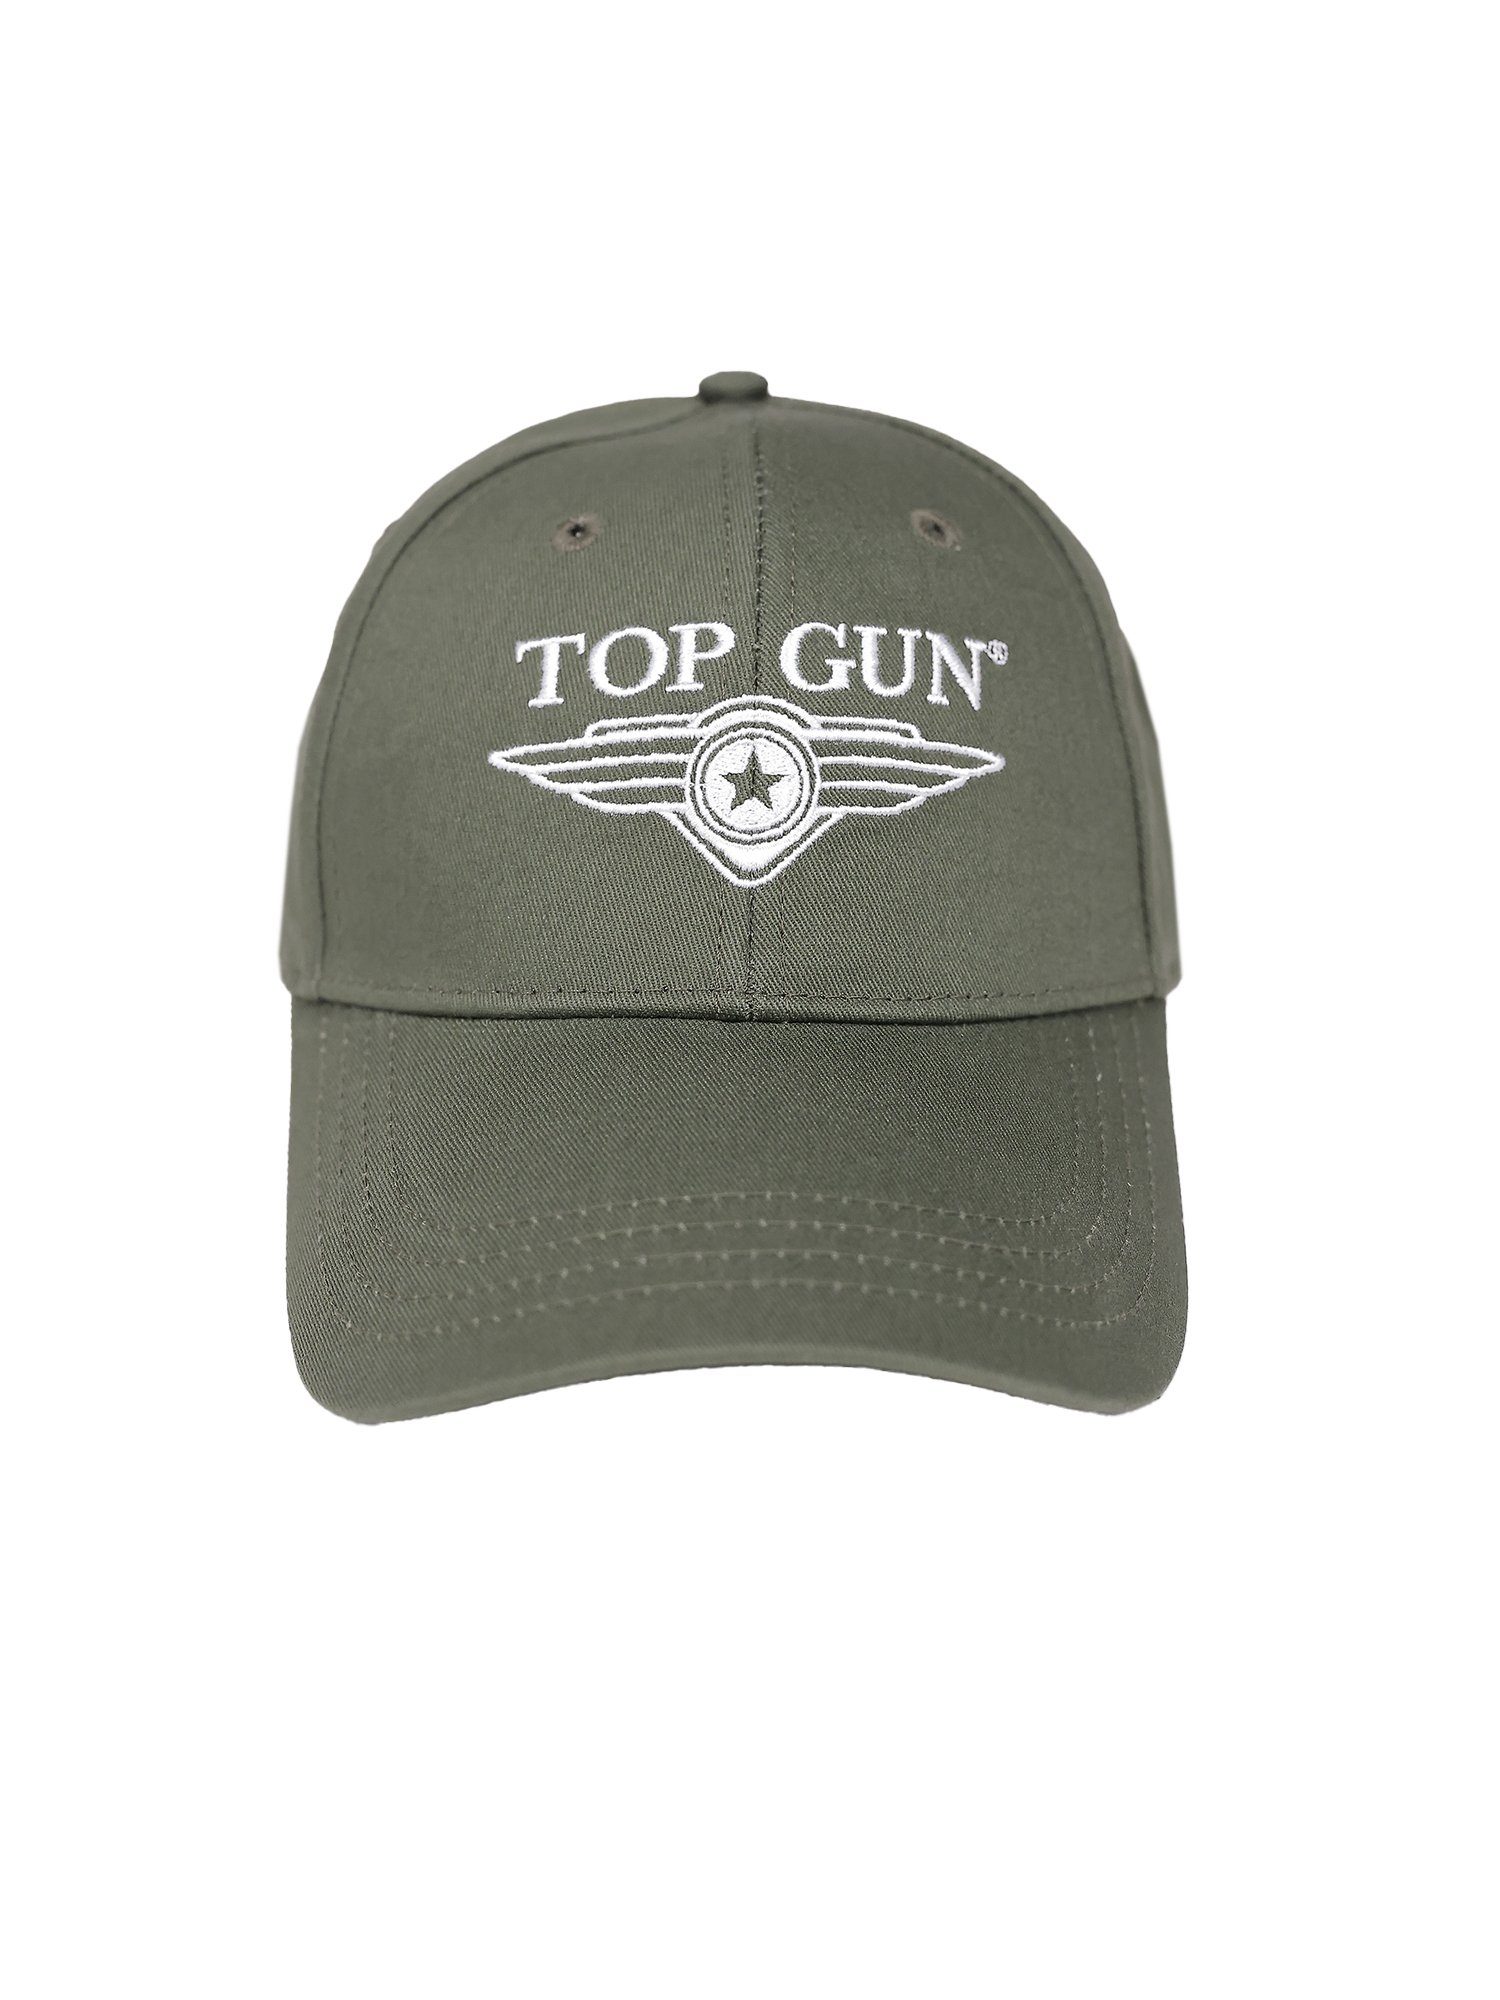 Rodung TOP GUN Snapback TG22013 grau Cap